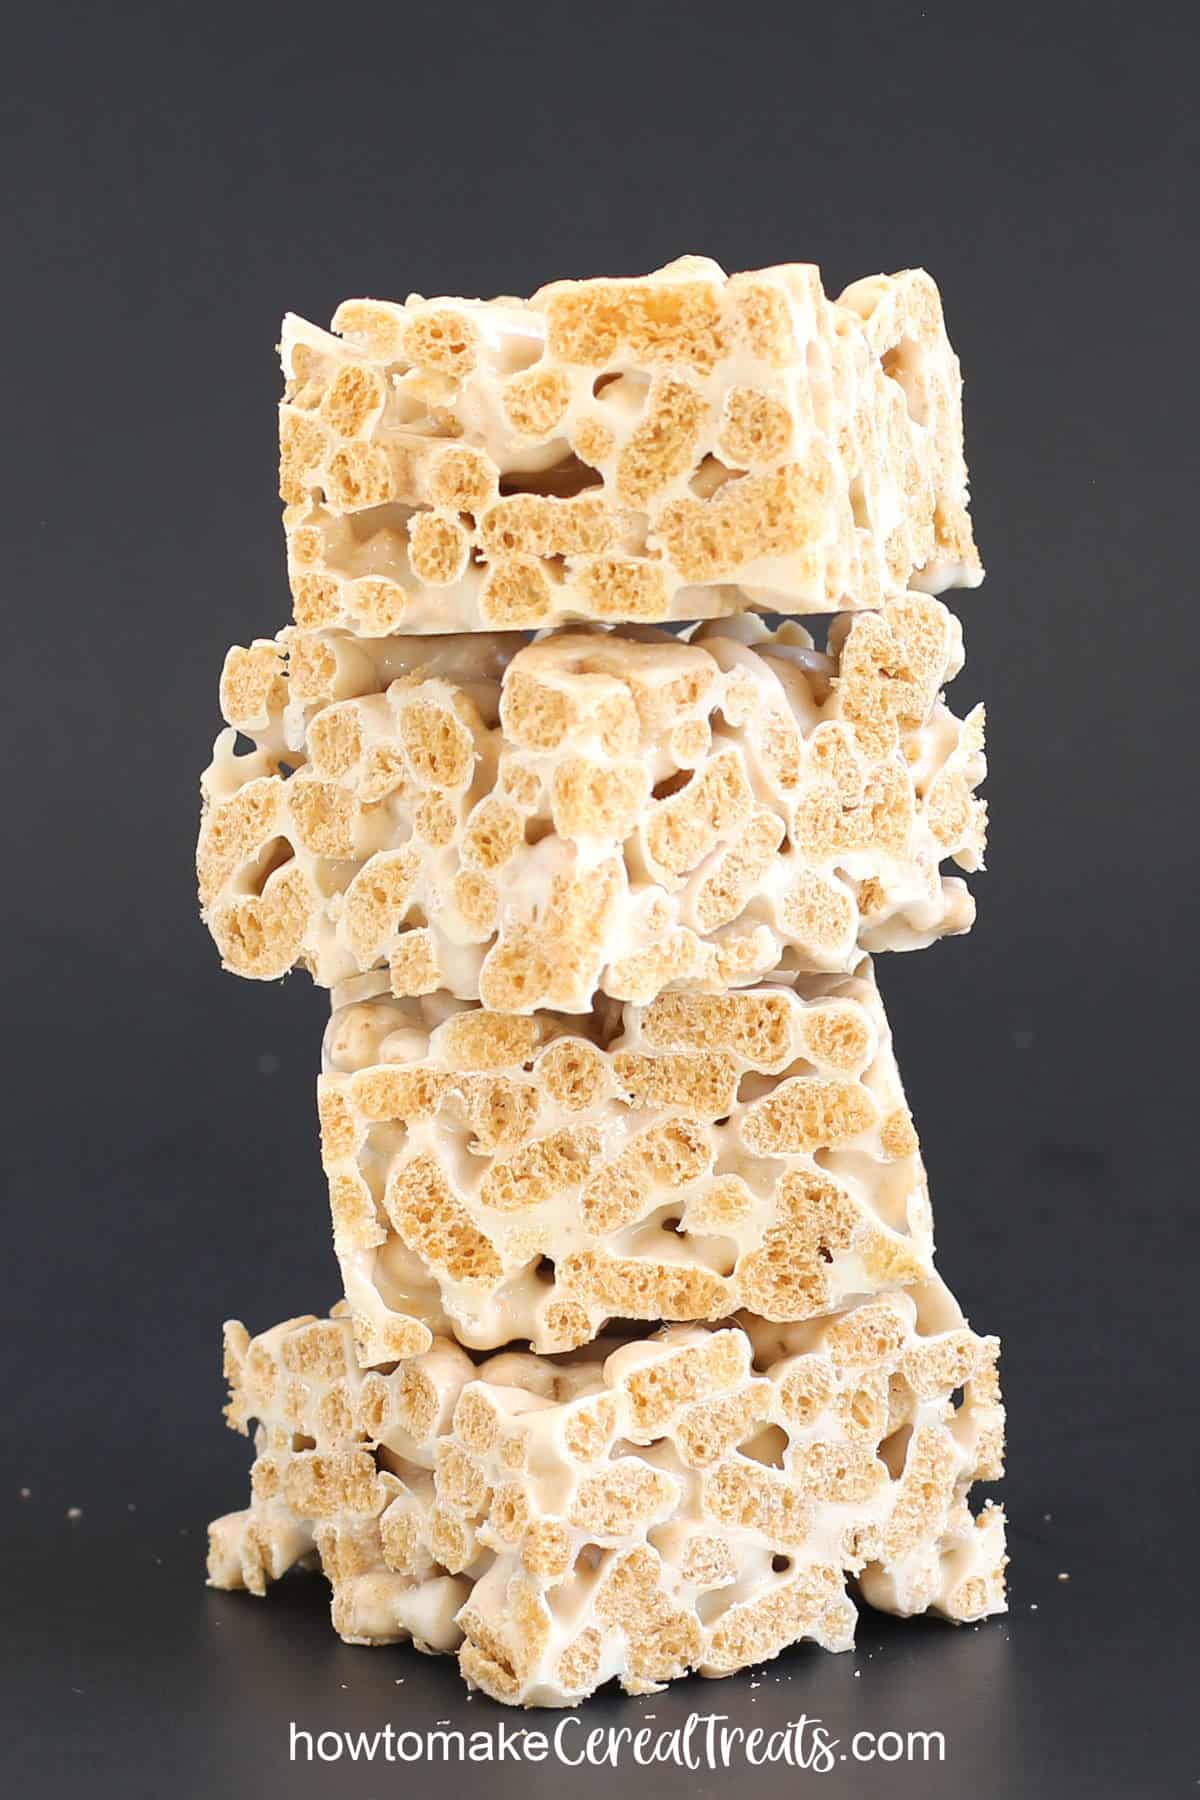 Marshmallow Alpha-Bits Cereal Treats